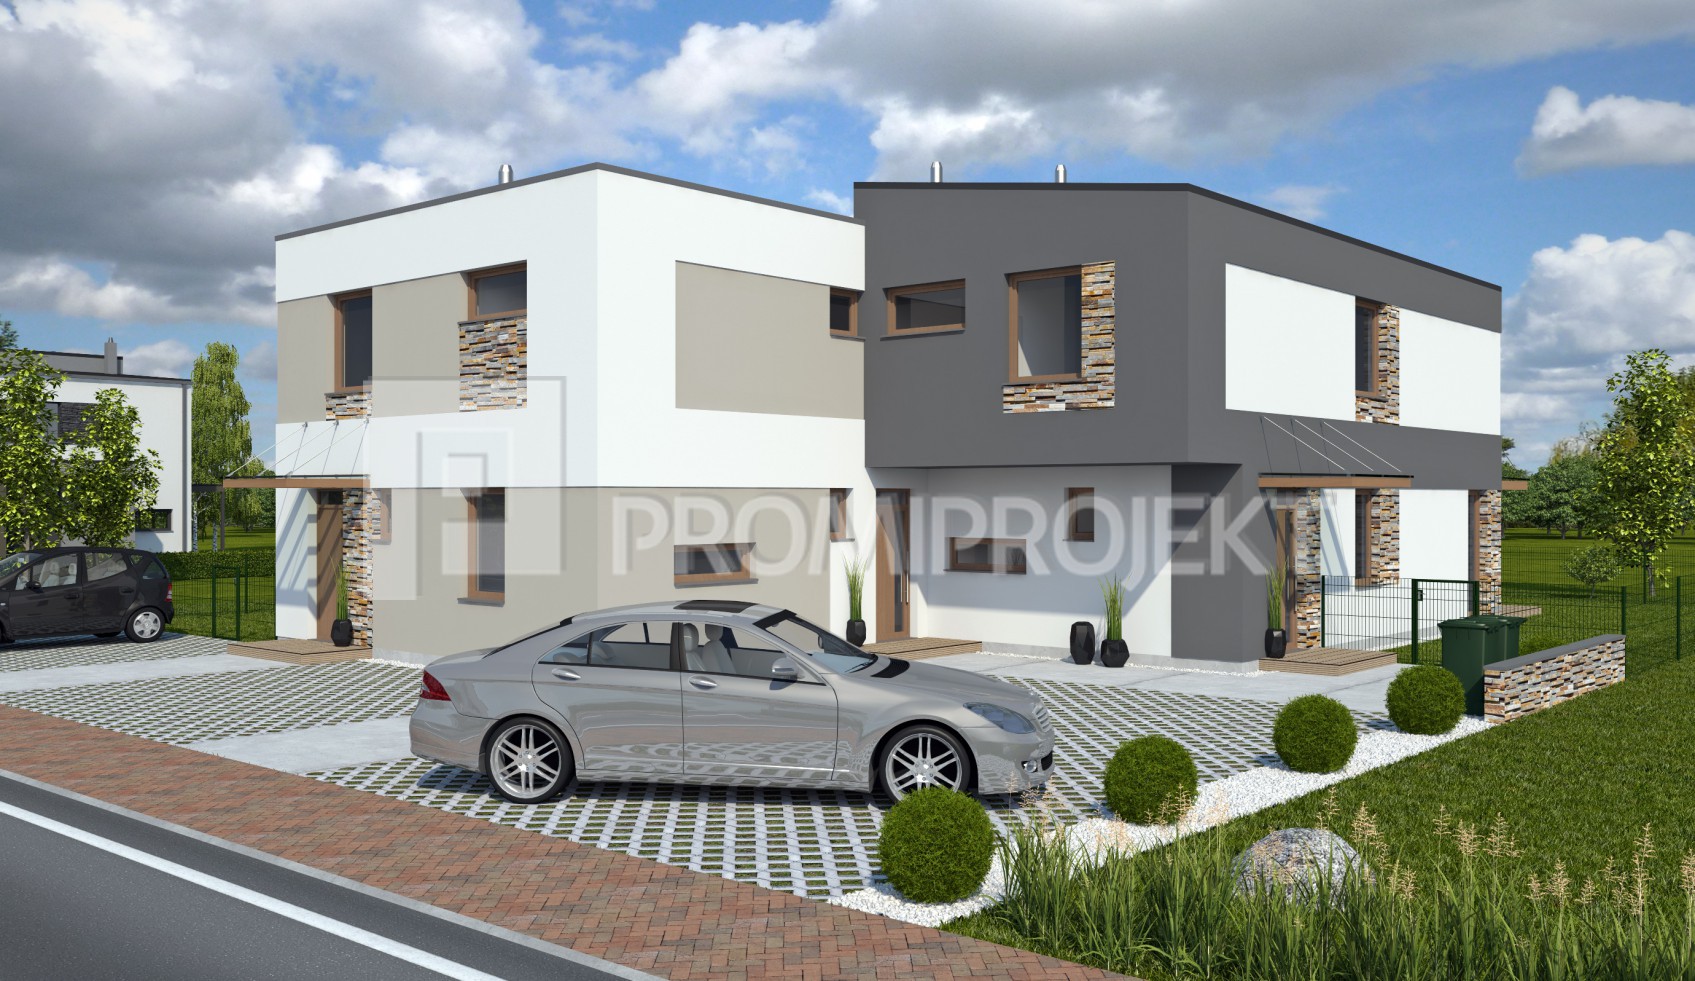 Cenová ponuka na stavbu trojbytoveho rodinného domu so zastavanou plochou I. NP 162,96 m 2 a II. NP 192,30 m 2 